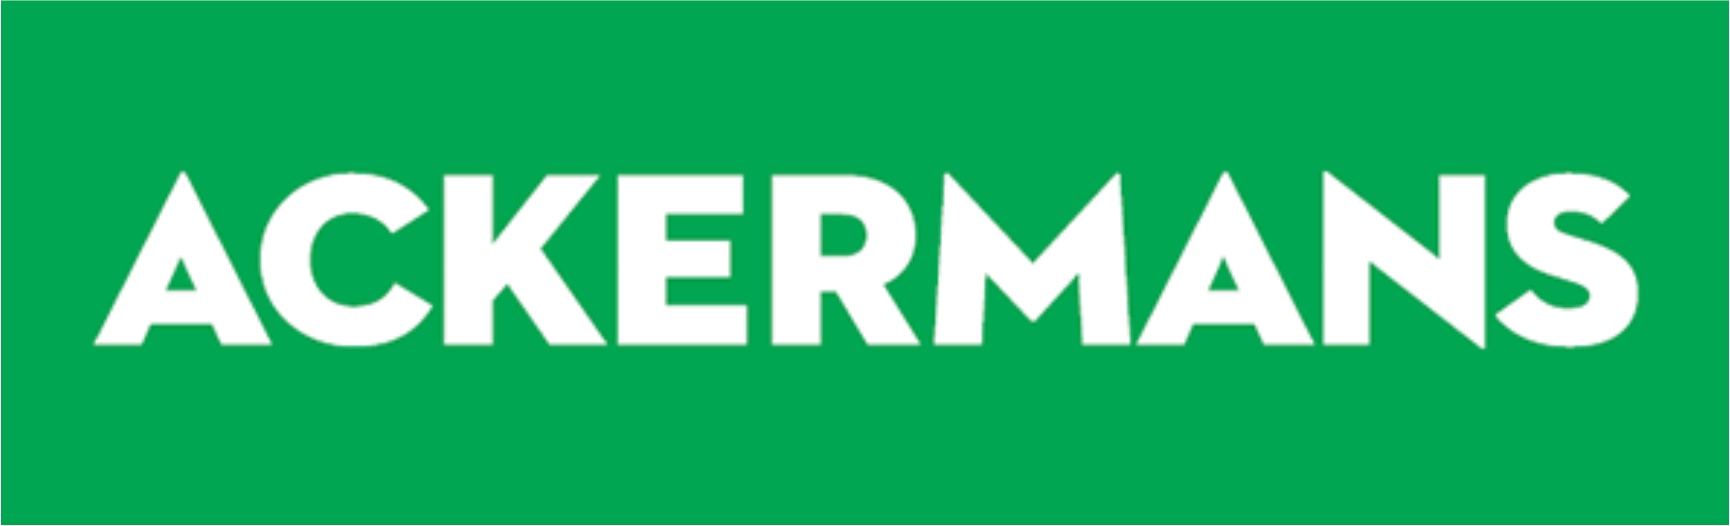 ackermans-logo